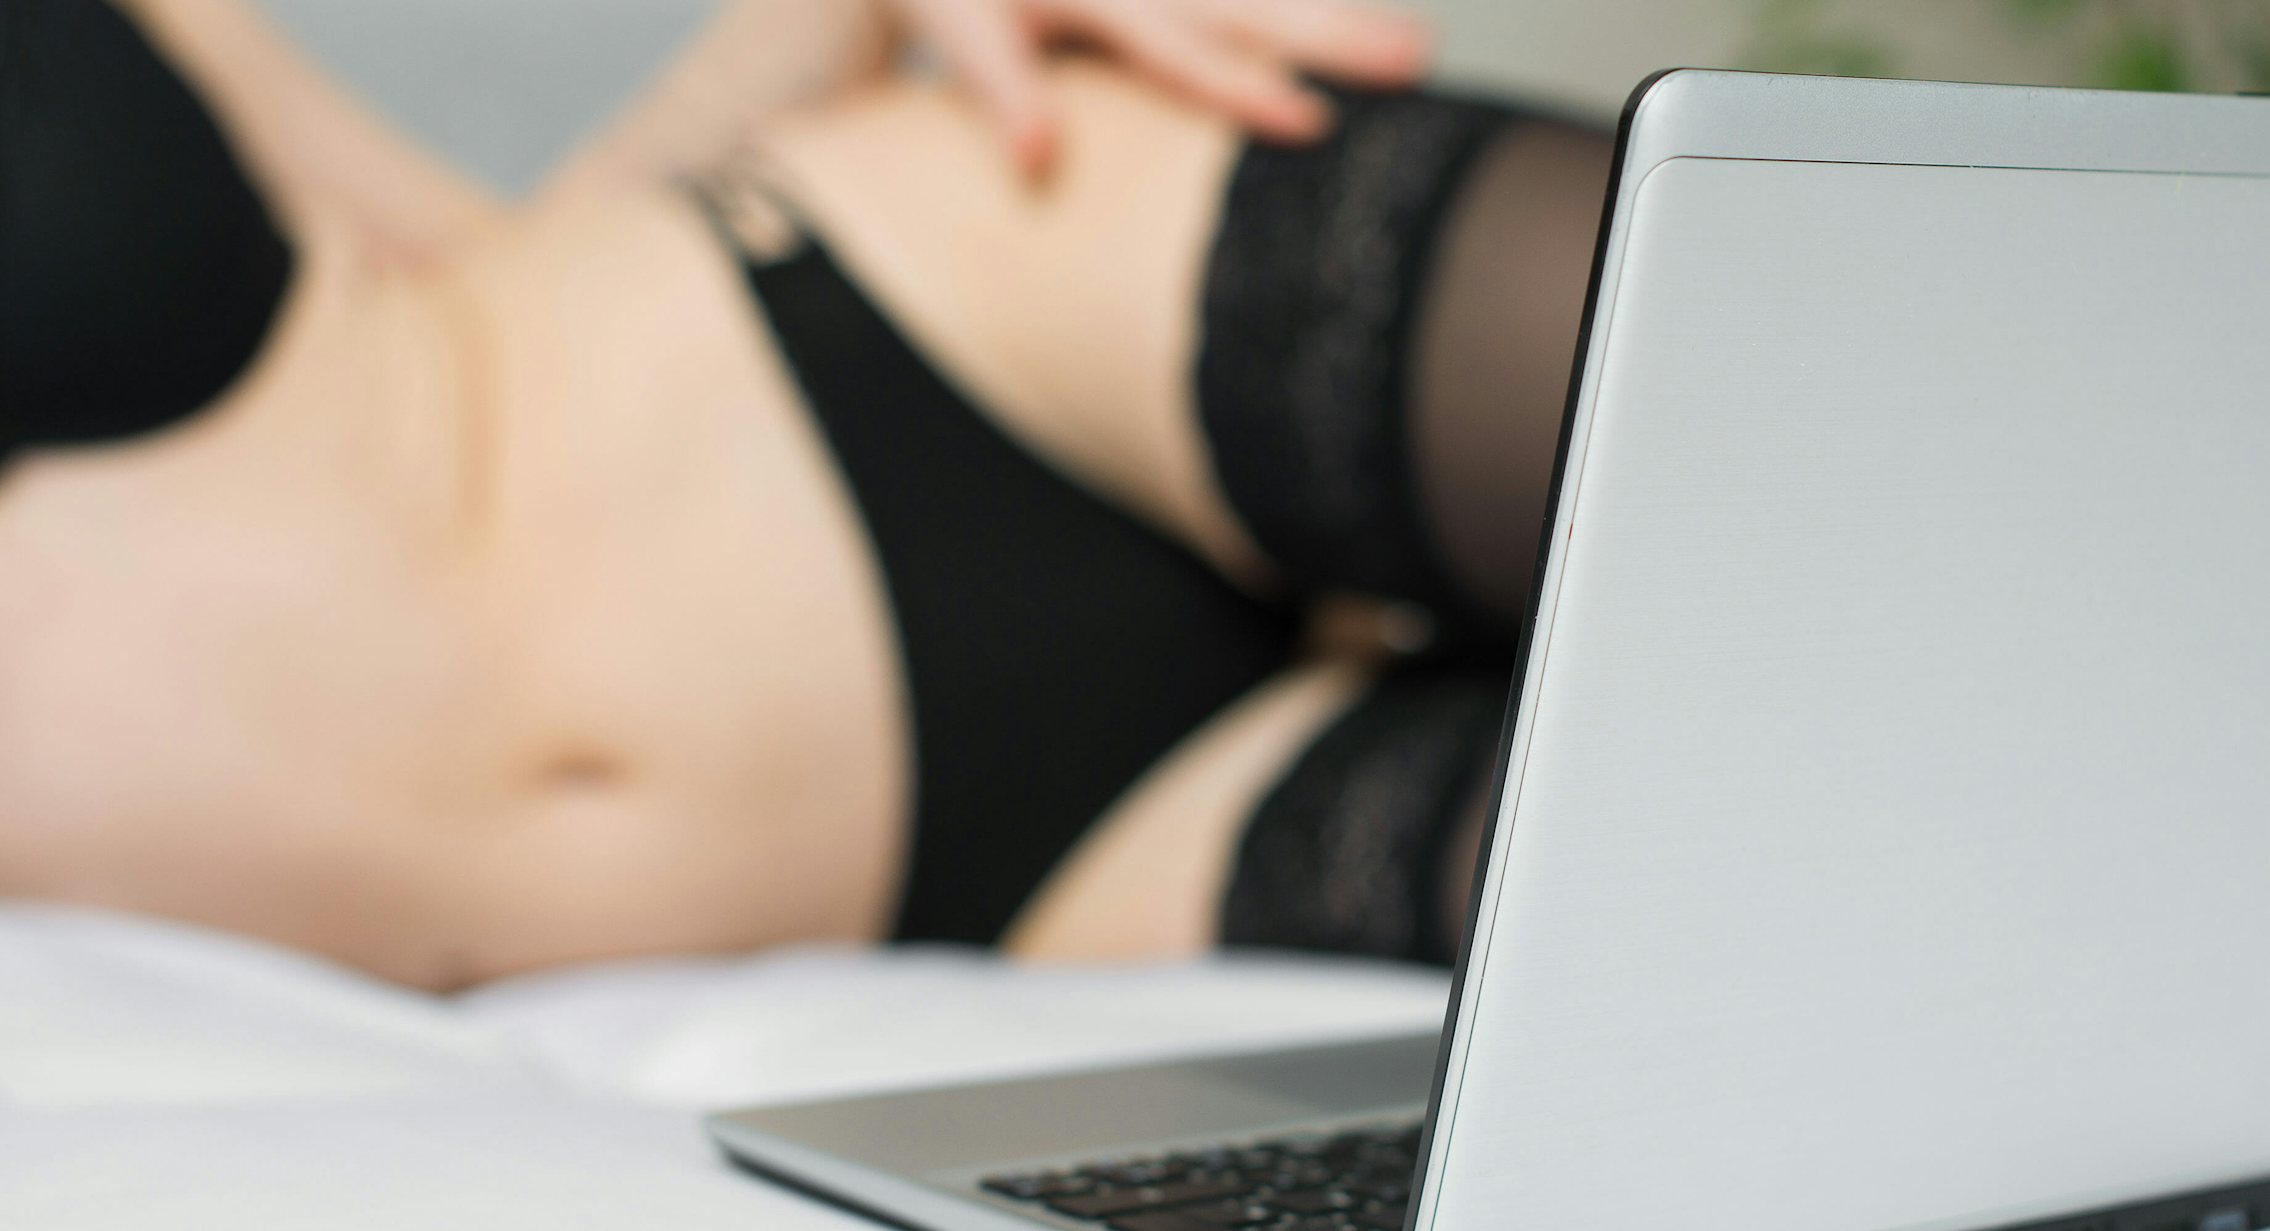 Webcam Sex Work - The Internet Is Leaving Cam Girls Vulnerable